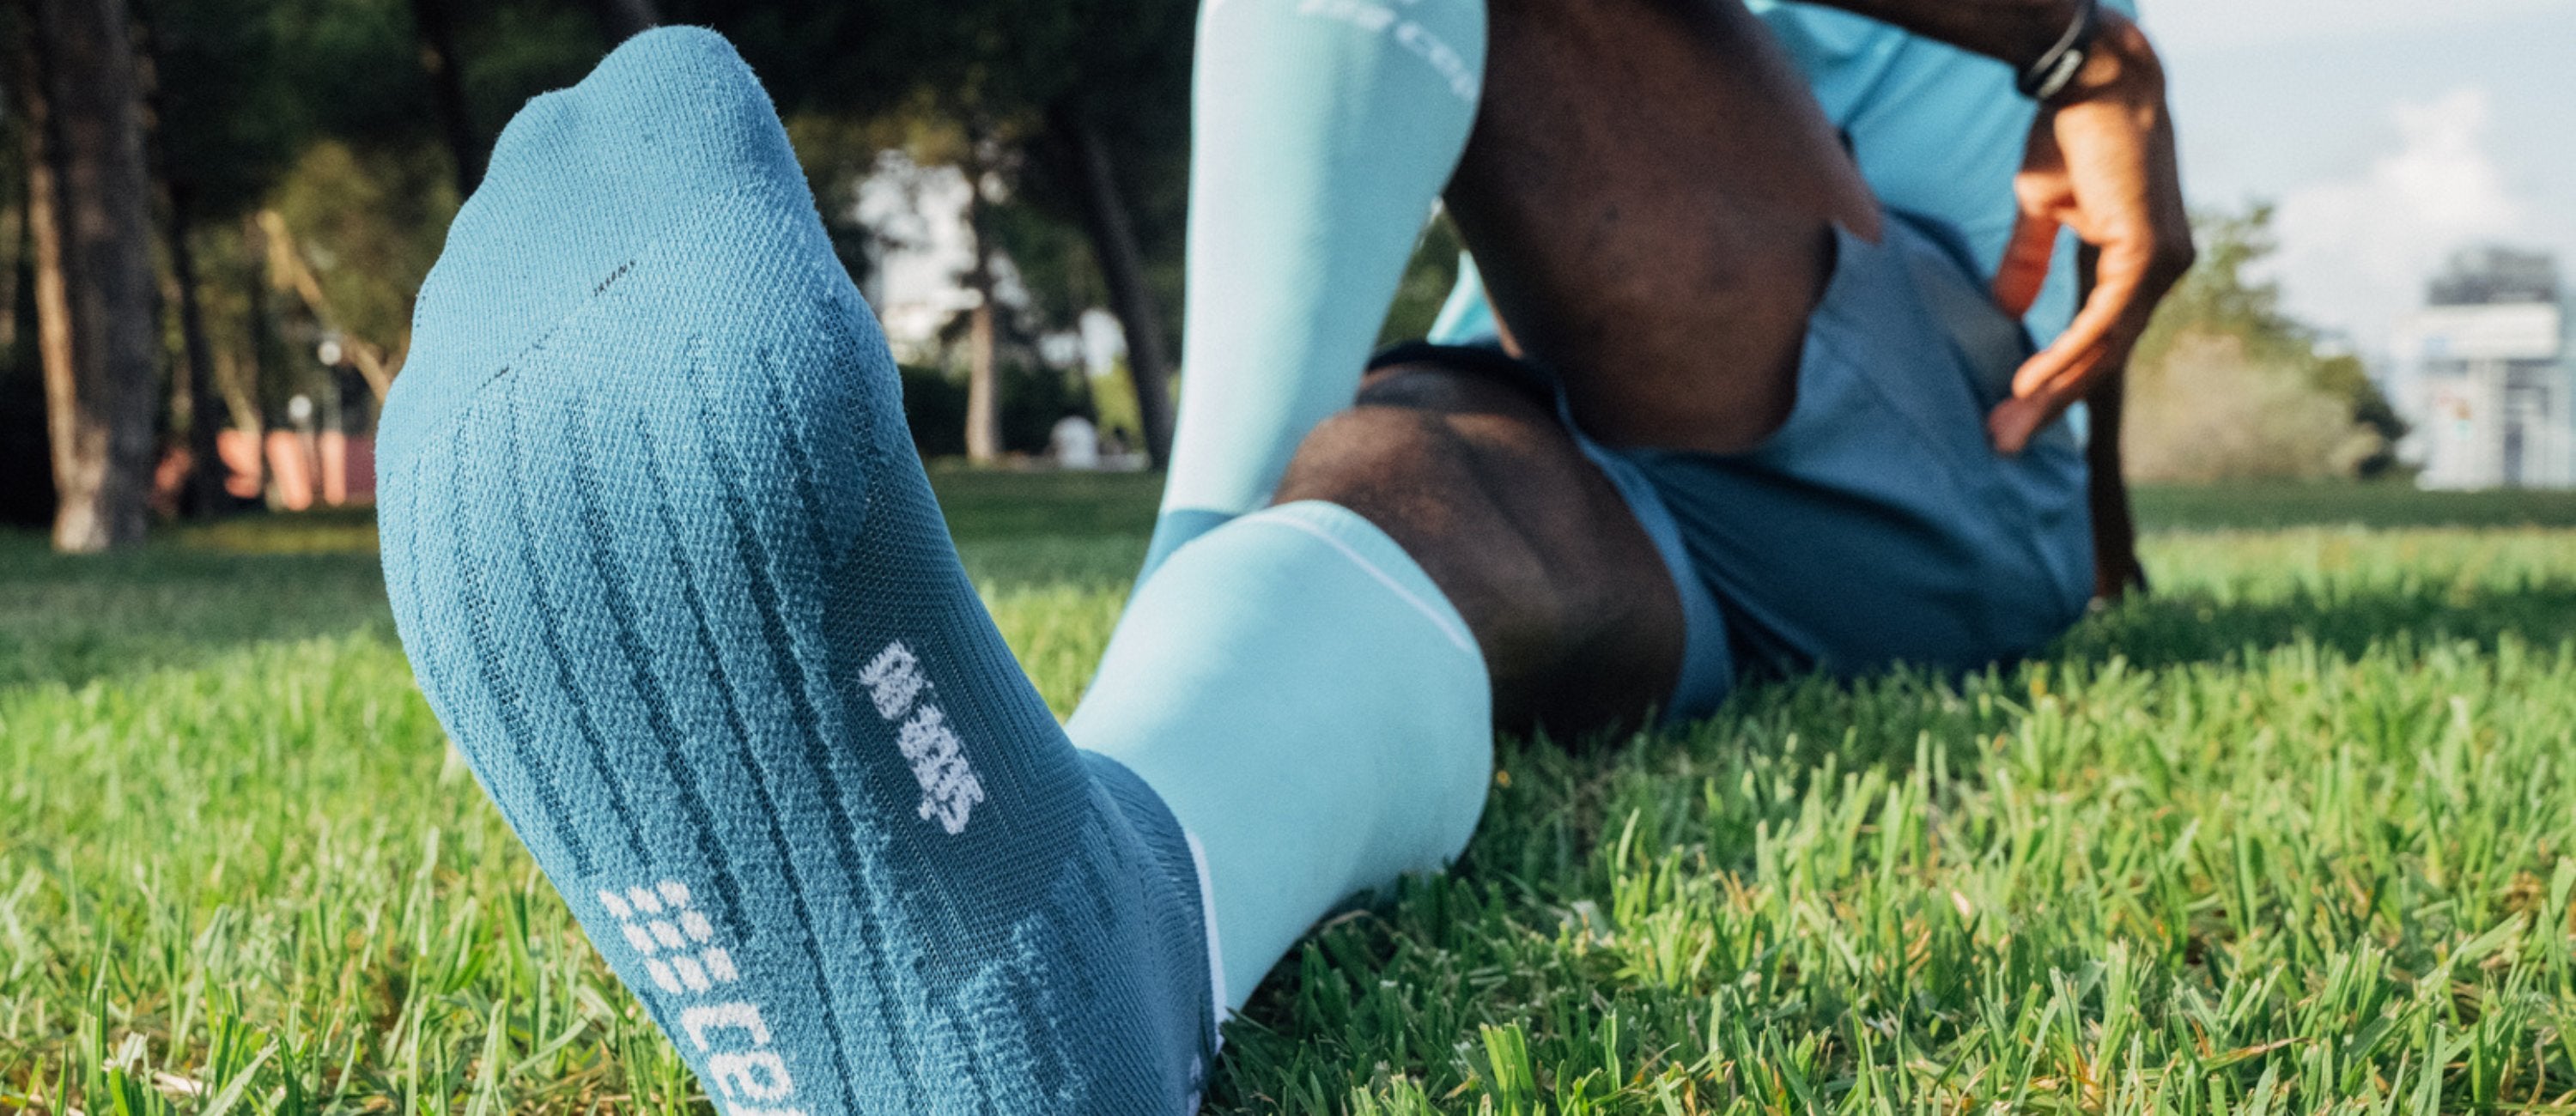 Compression Socks For Men  CEP Activating Compression Sportswear